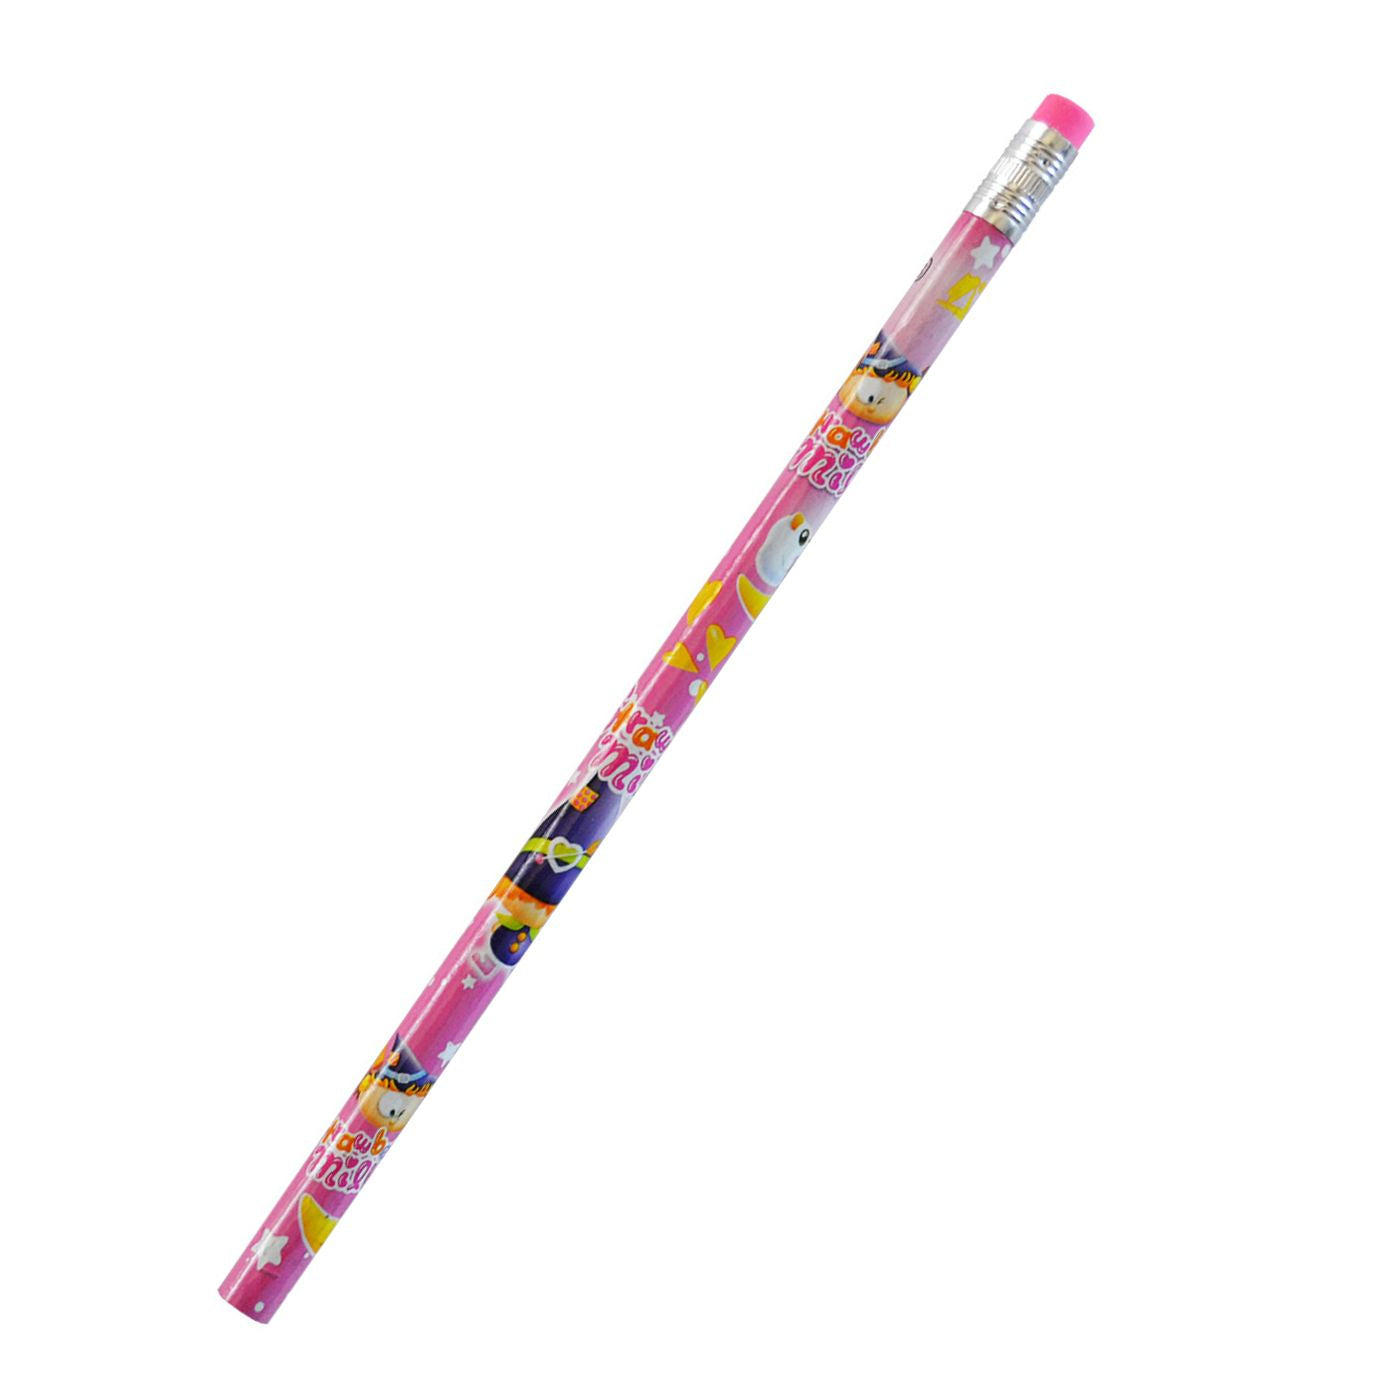 Fun HB Graphite Pencils with Eraser Tip Assorted